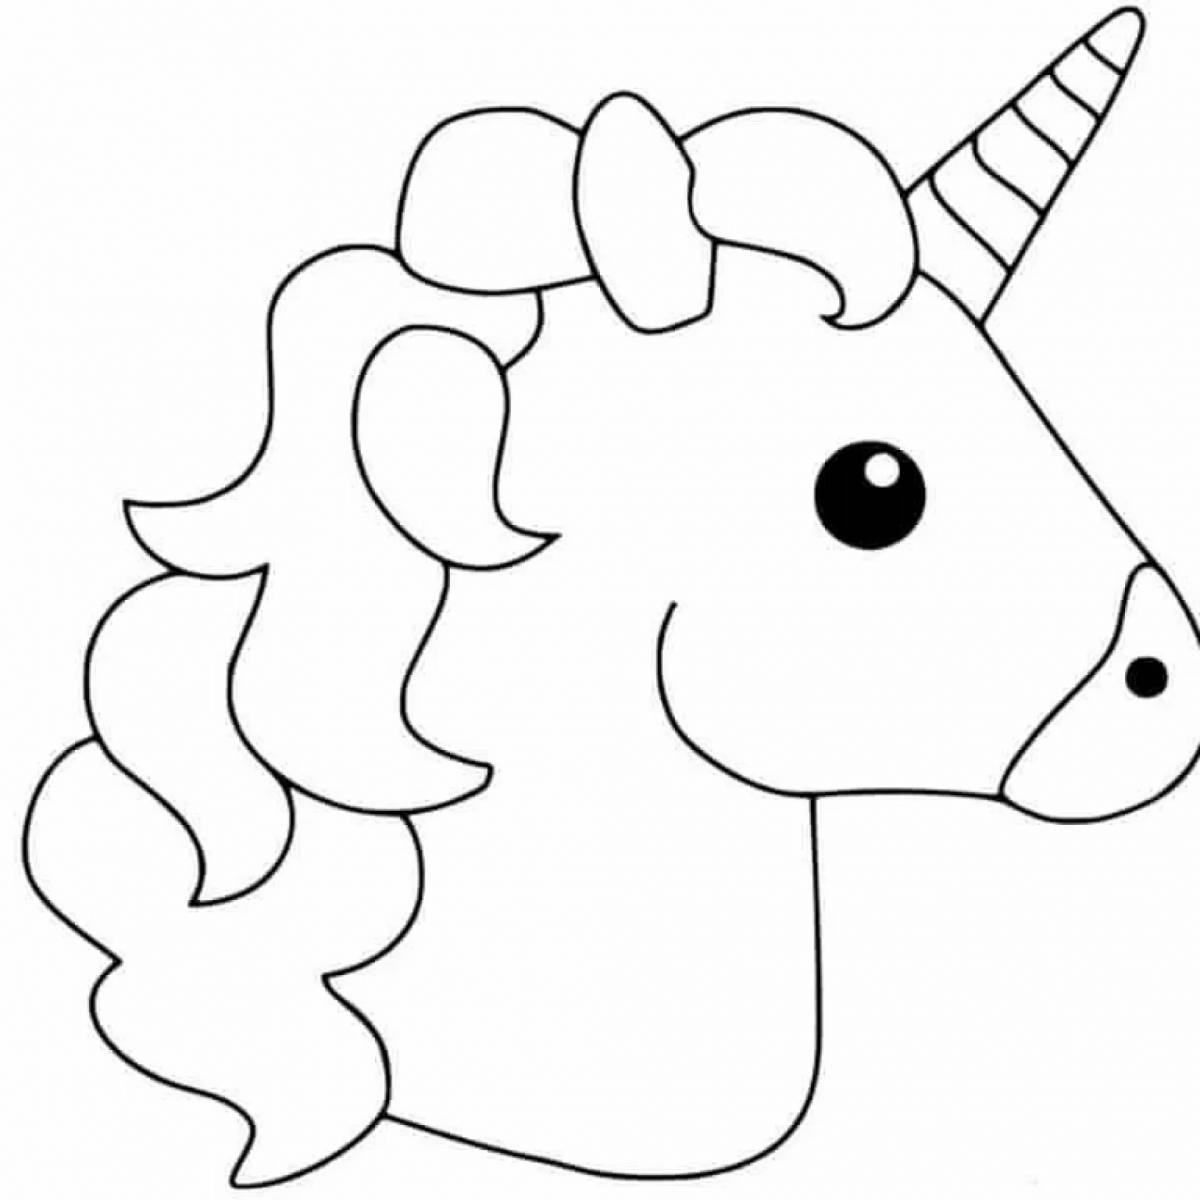 Incredible coloring simple unicorn